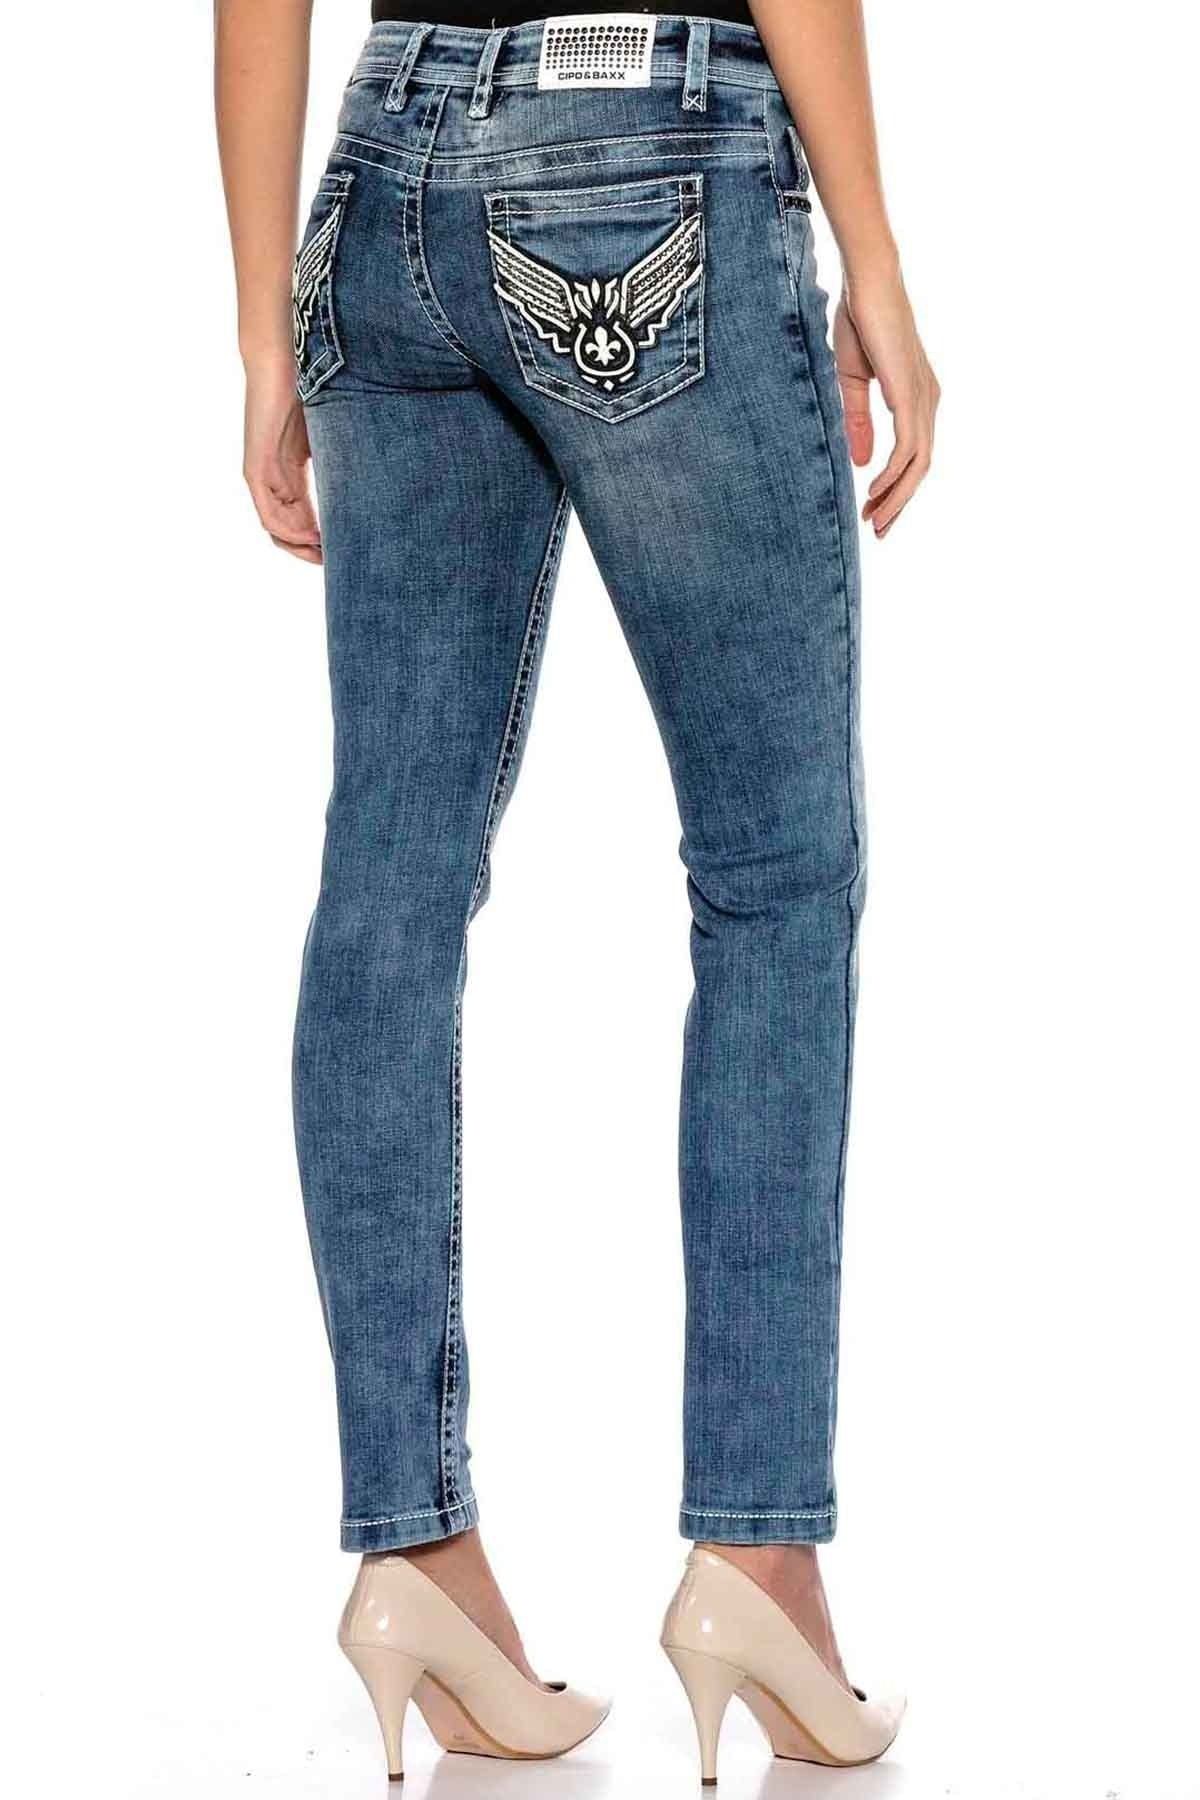 Cipo&Baxx Wd401 Taşlı Kanatlı Cep Detaylı Mavi Jeans Pantolon